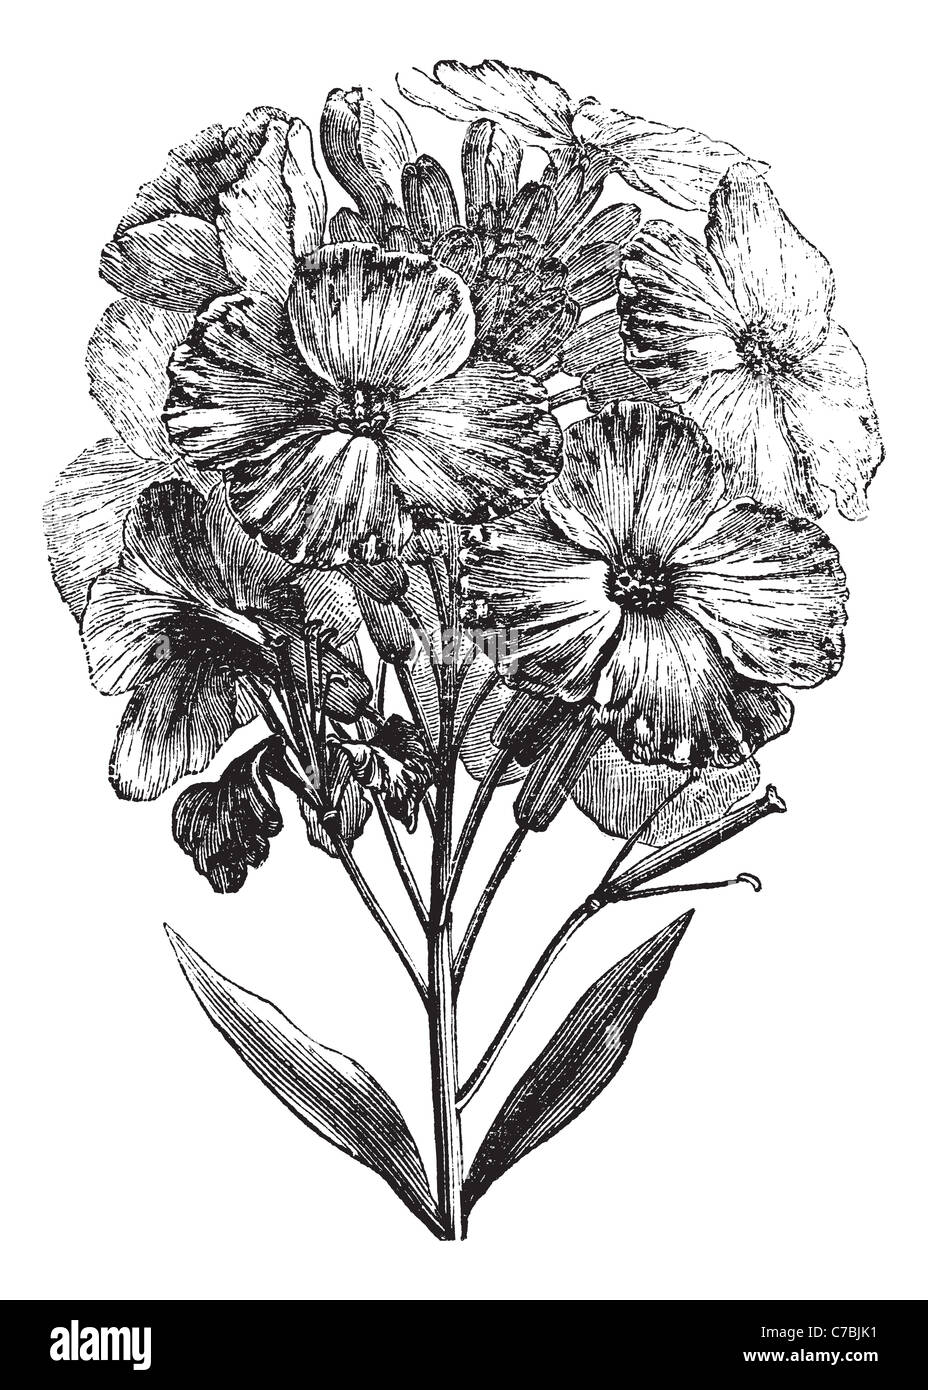 Aegean wallflower or Erysimum cheiri or Cheiranthus cheiri, vintage engraving. Old engraved illustration of Aegean wallflower. Stock Photo